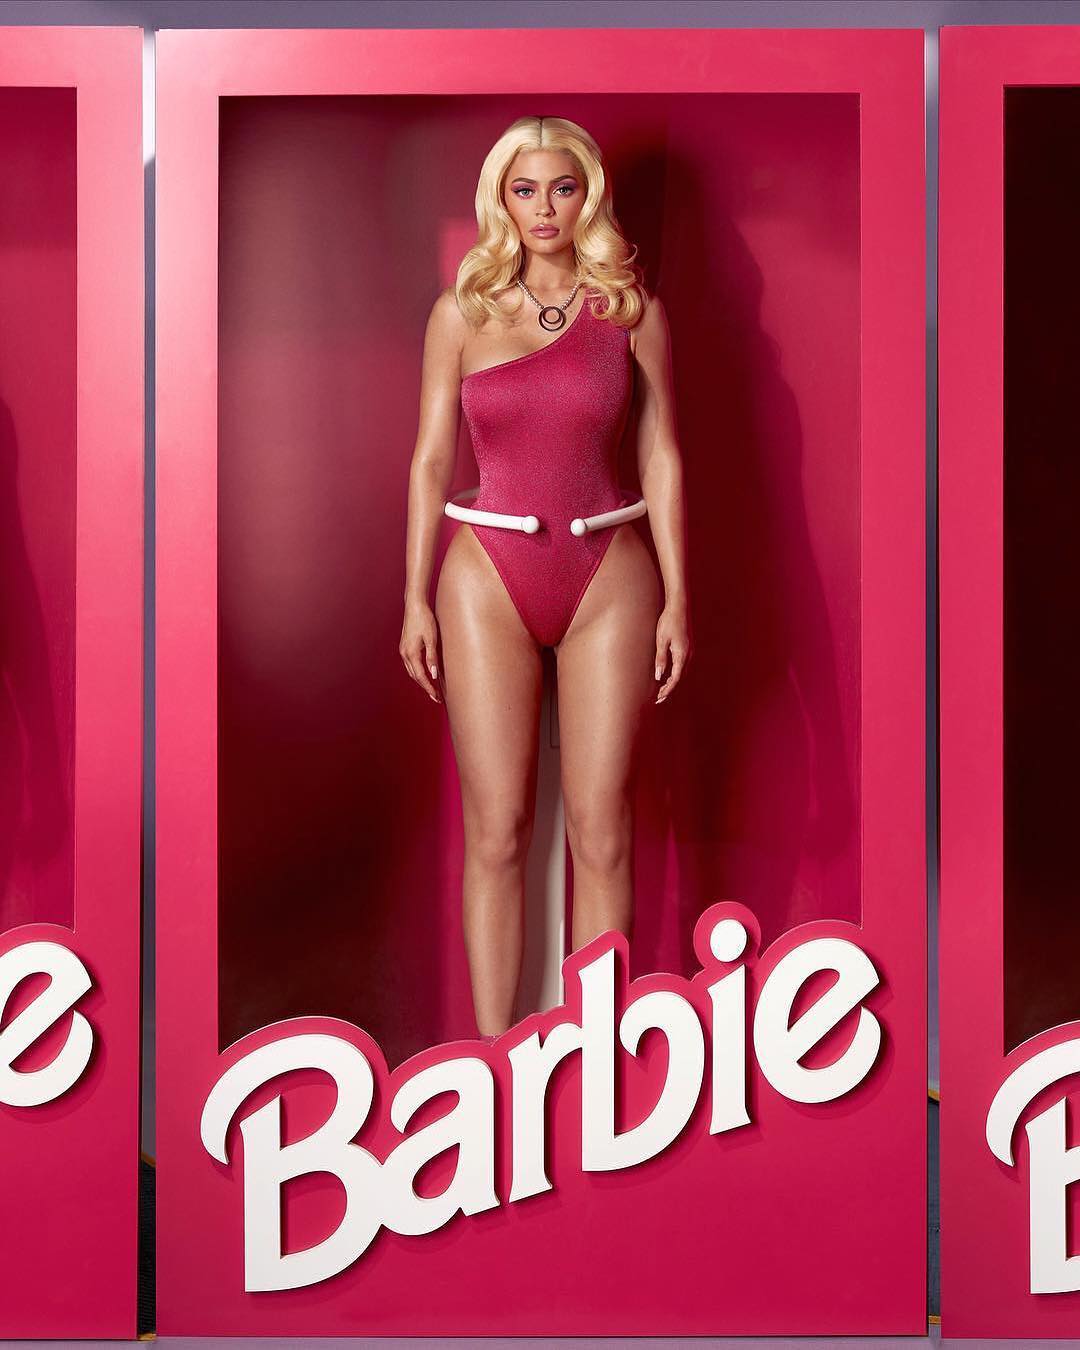 Kylie Jenner as Barbie